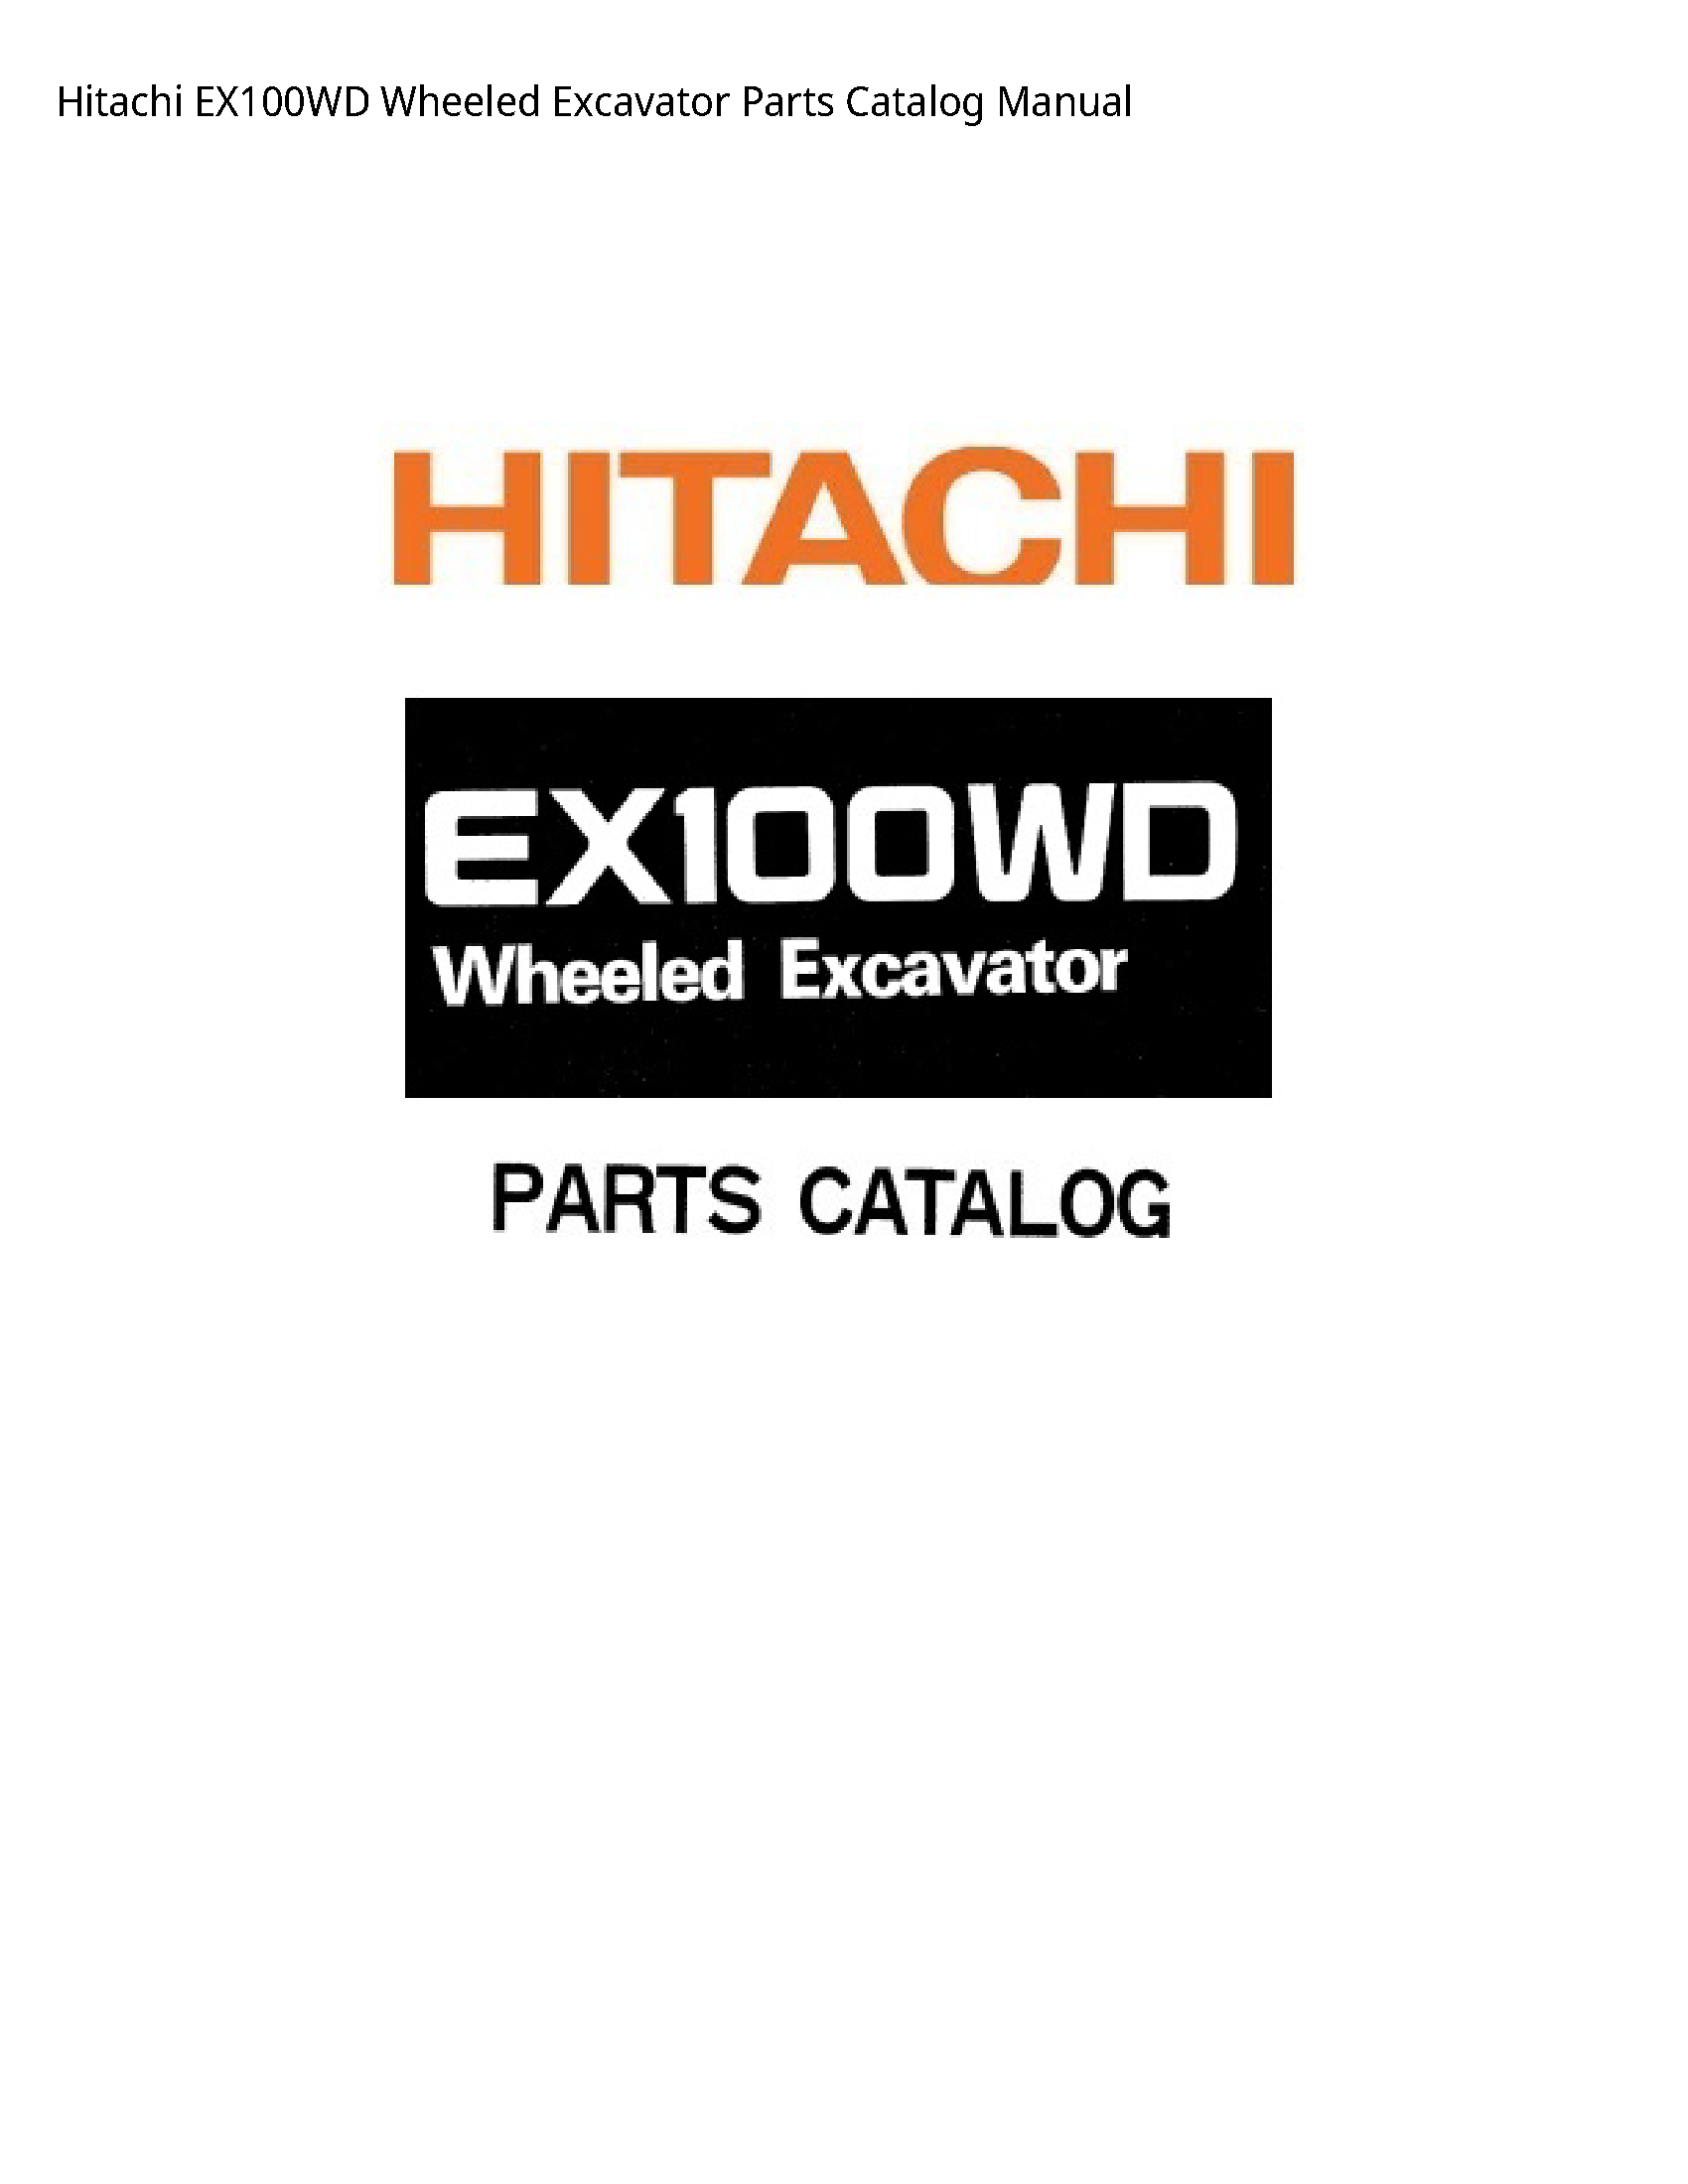 Hitachi EX100WD Wheeled Excavator Parts Catalog manual